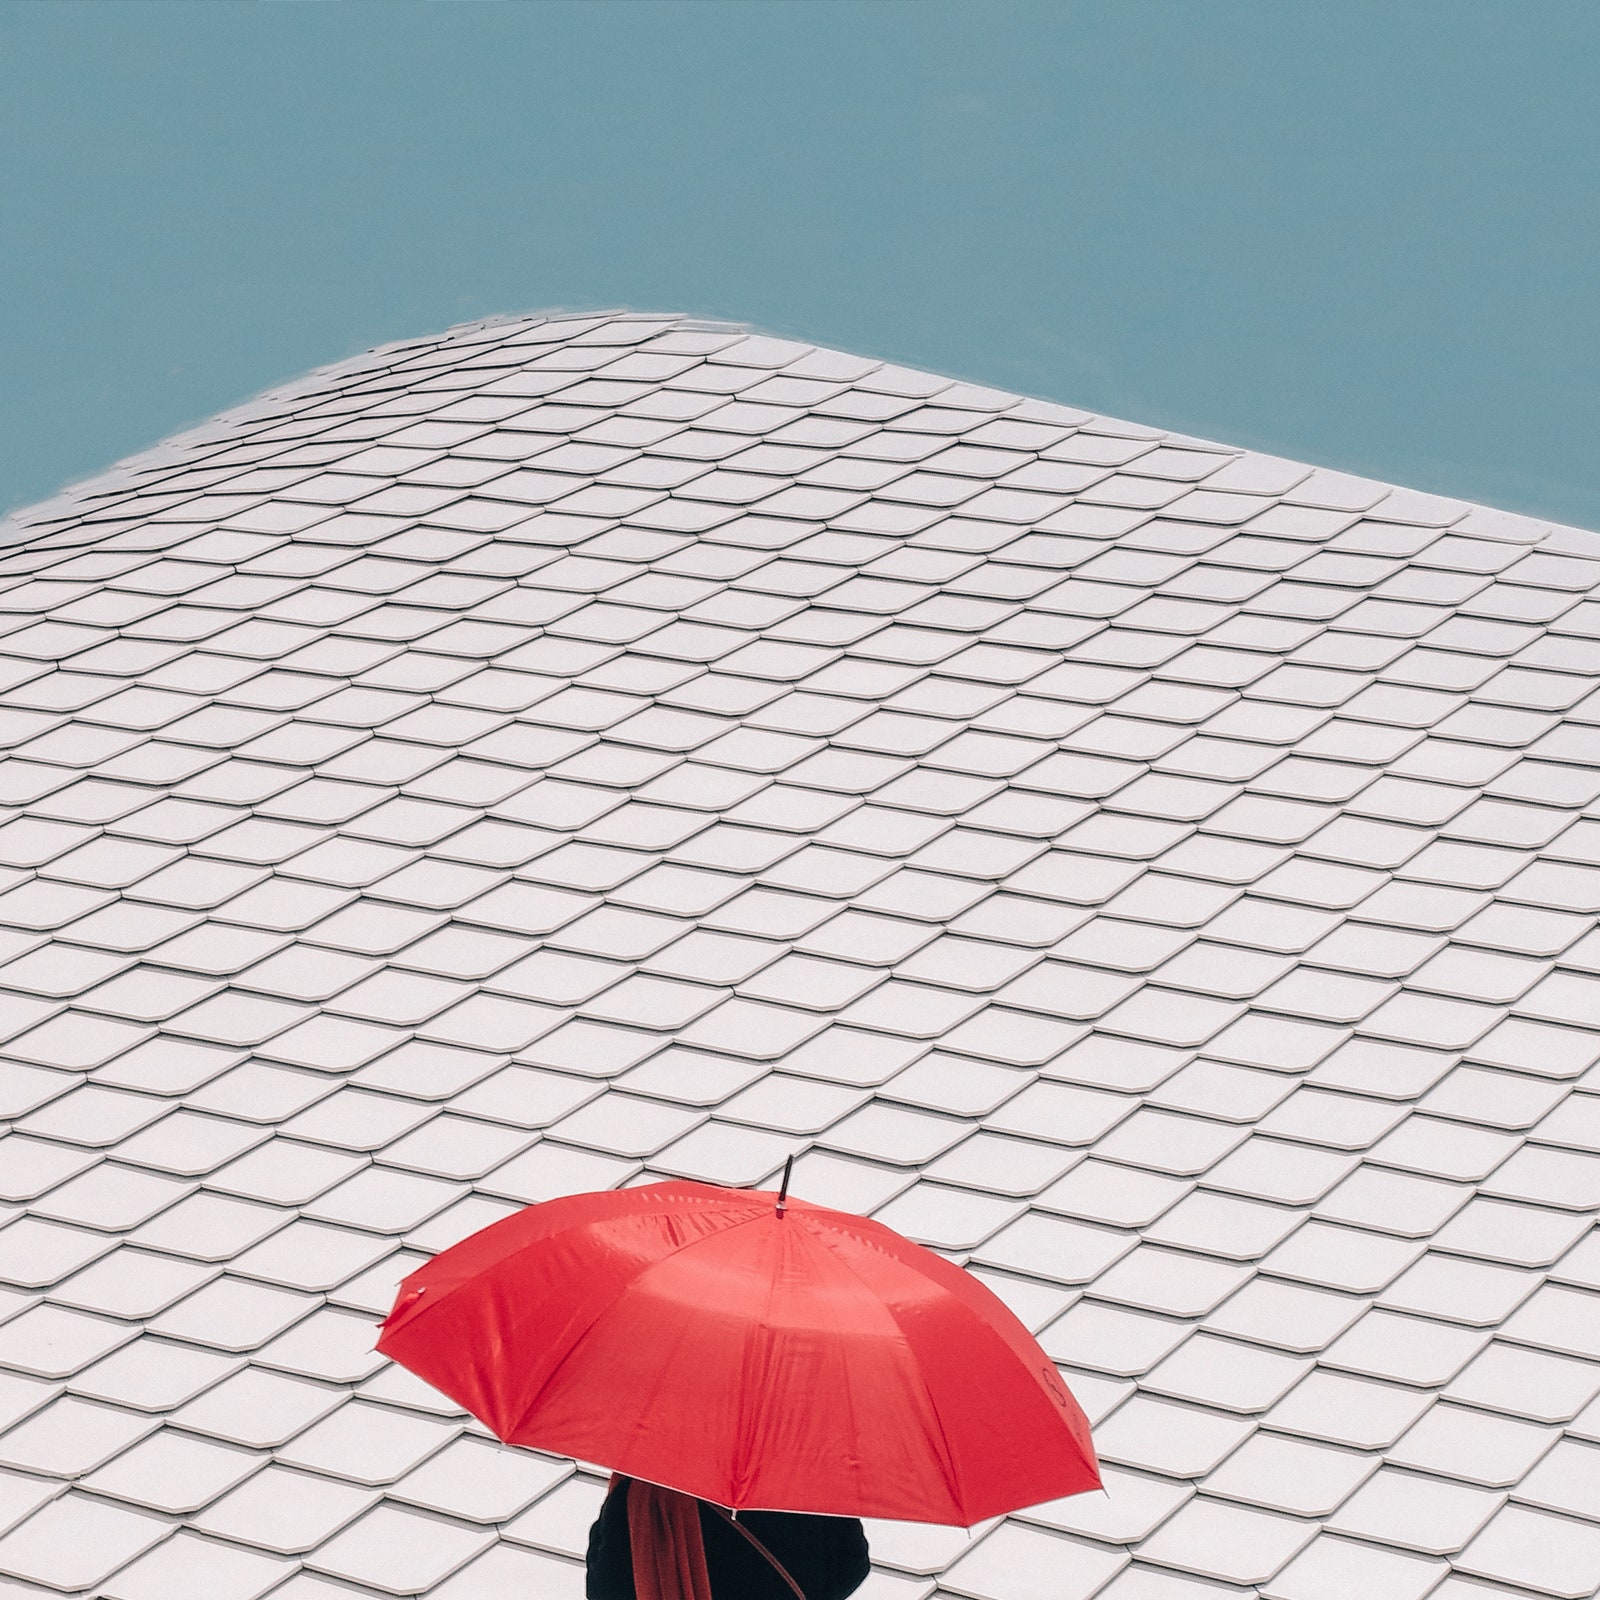 Red Umbrella Against Blue Sky